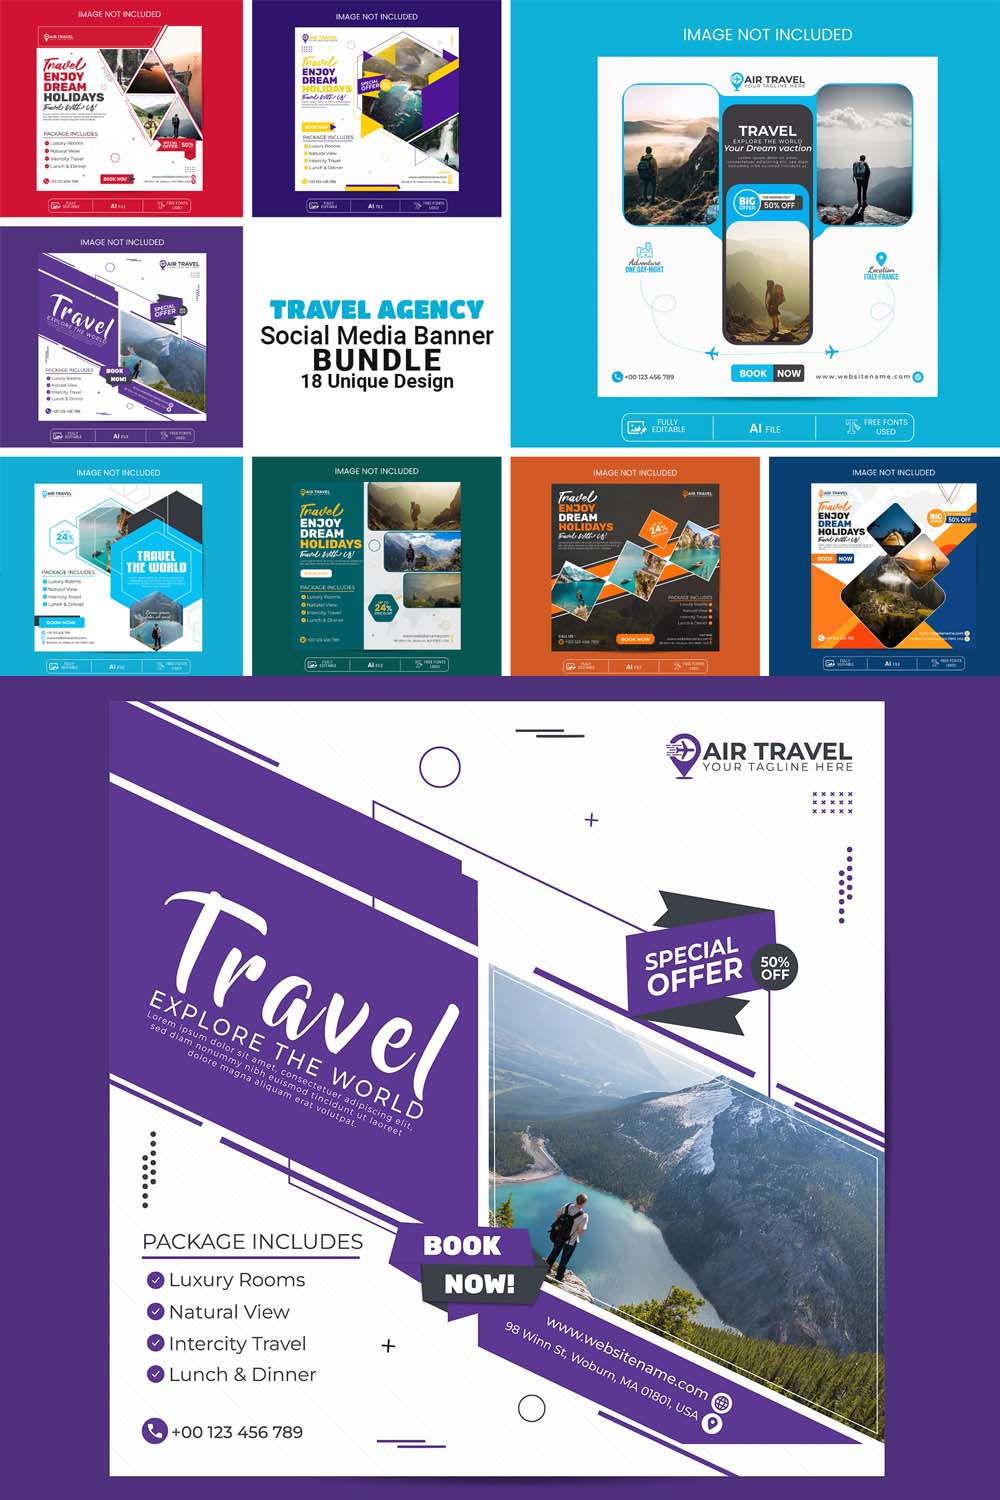 Travel Agency Social Media Post pinterest preview image.